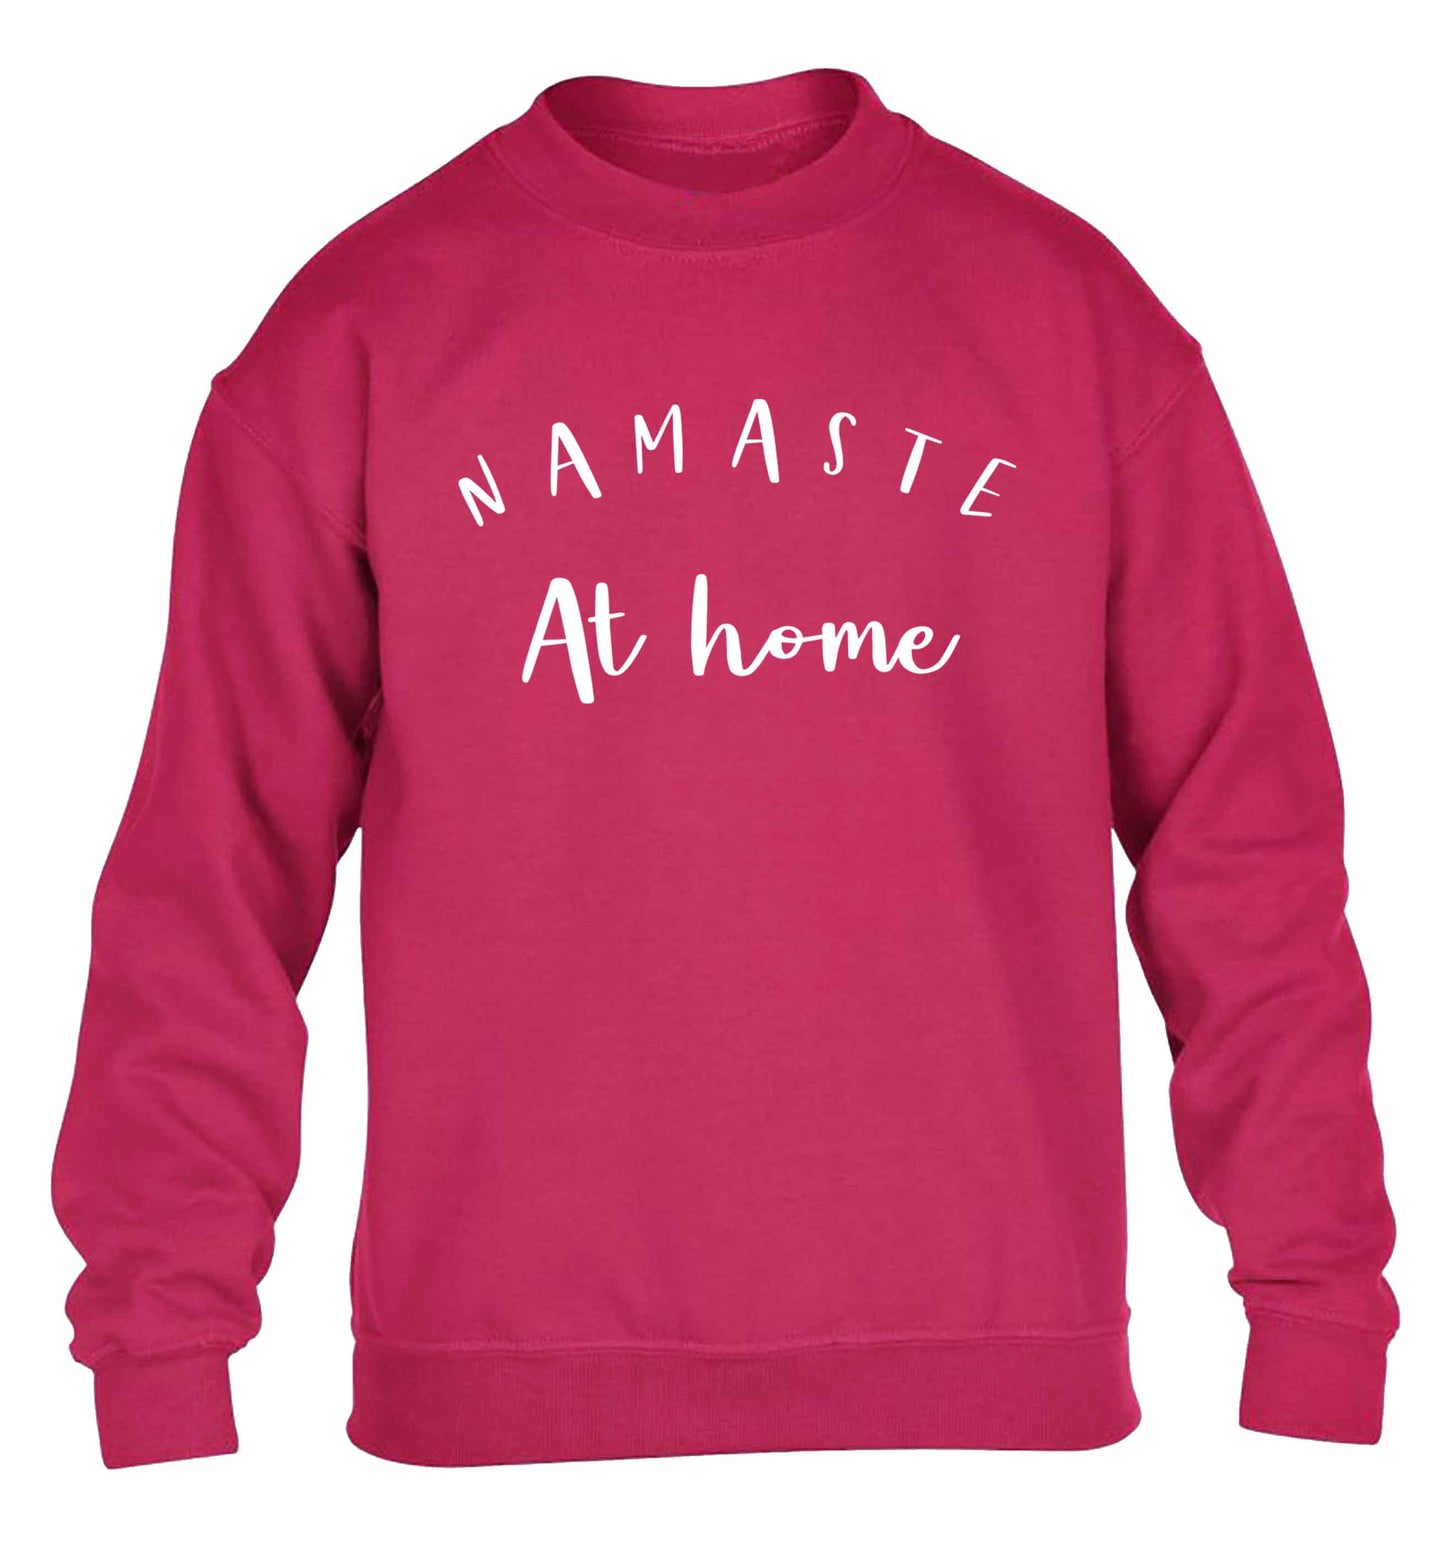 Namaste at home children's pink sweater 12-13 Years